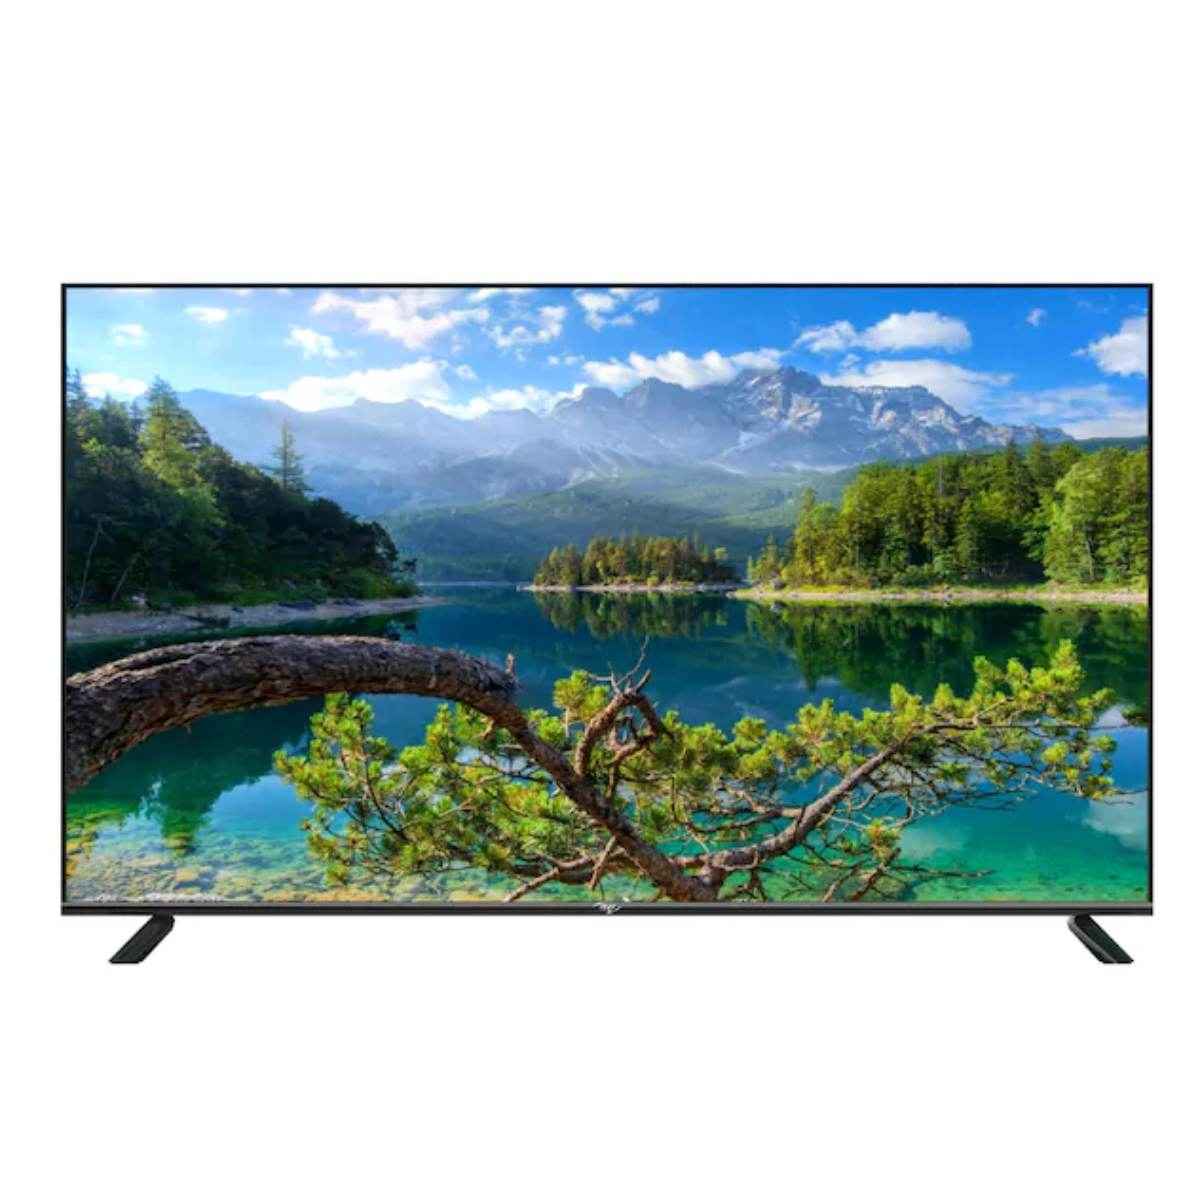 Itel 55 inch HD Smart TV (I5514IE)